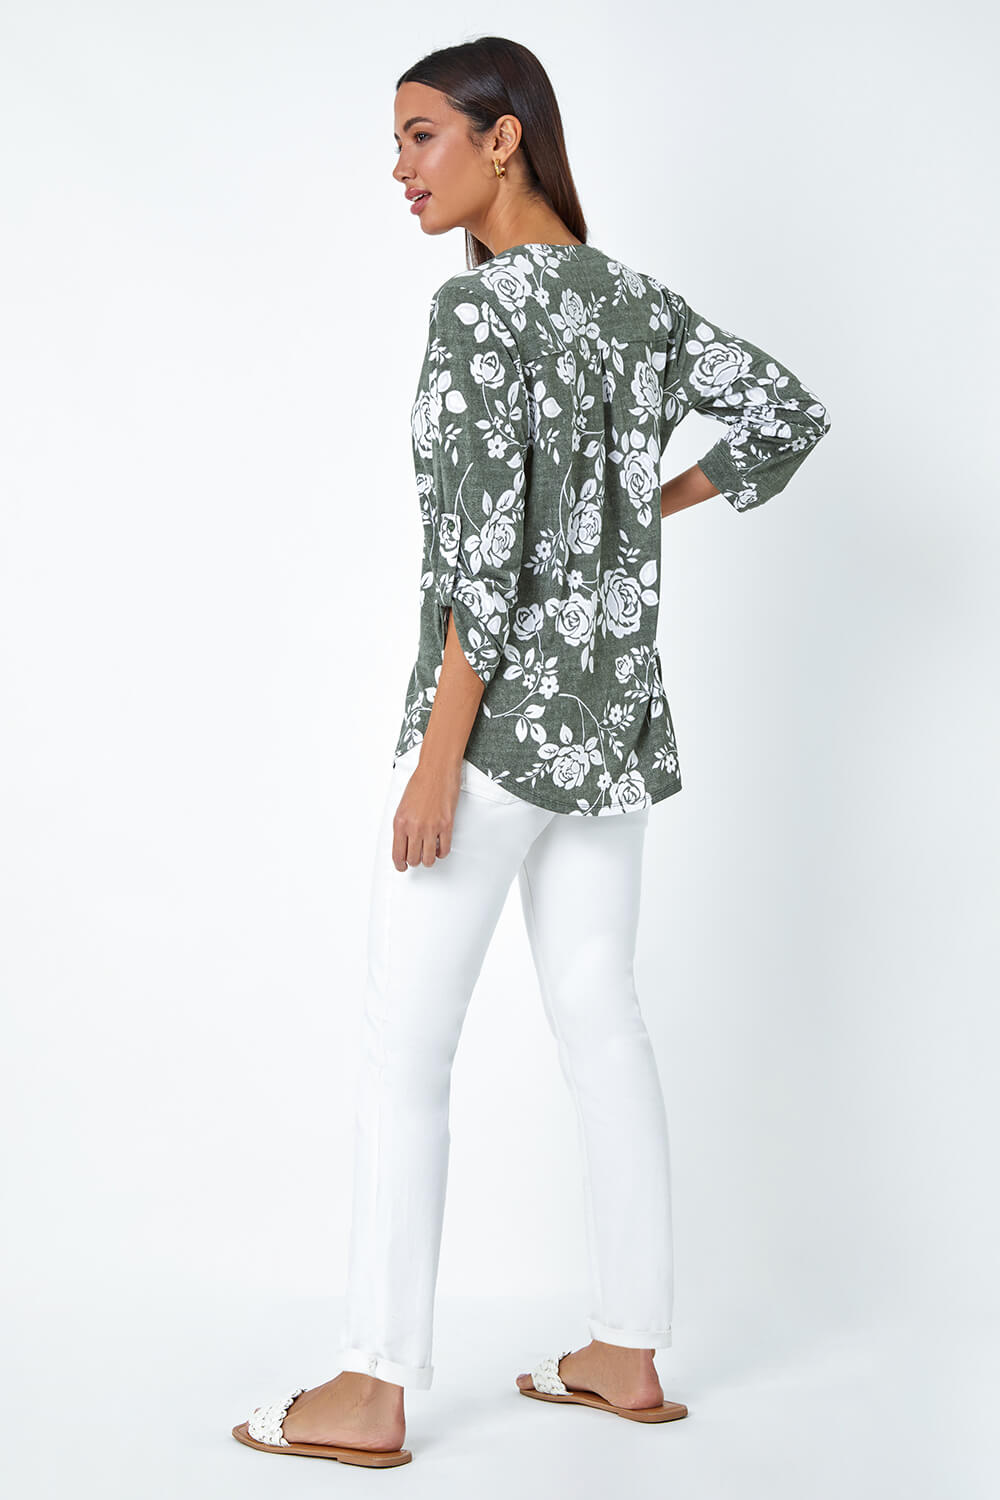 KHAKI Textured Floral Print Stretch Shirt, Image 3 of 5